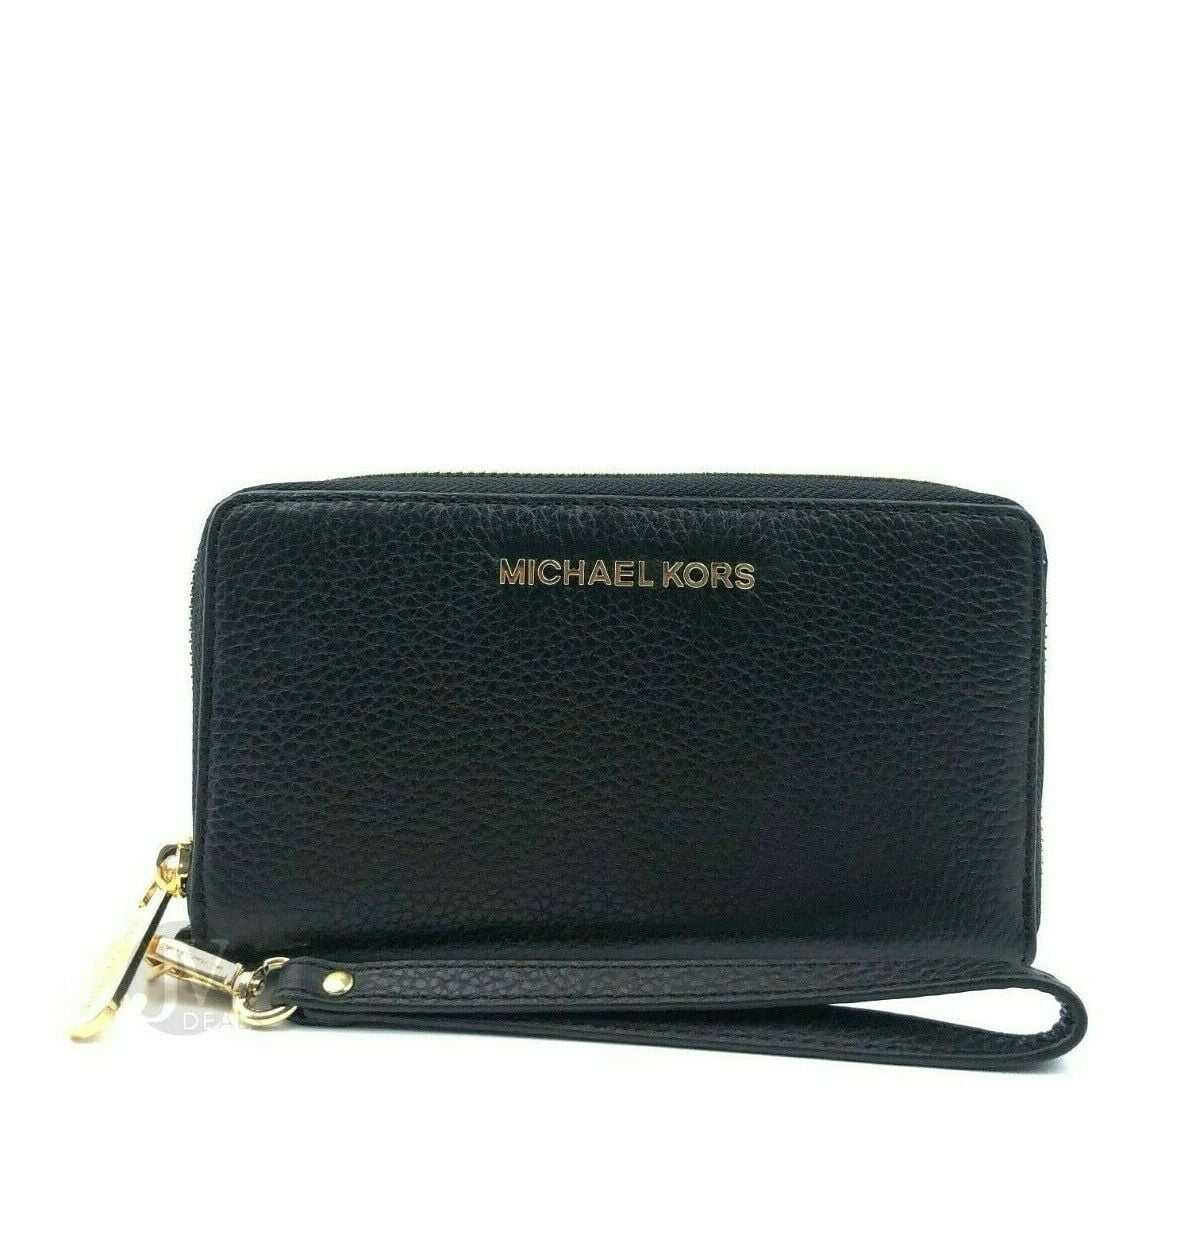 Michael Kors Jet Set Large Leather Black Gold Multifunction Phone Wristlet Wallet